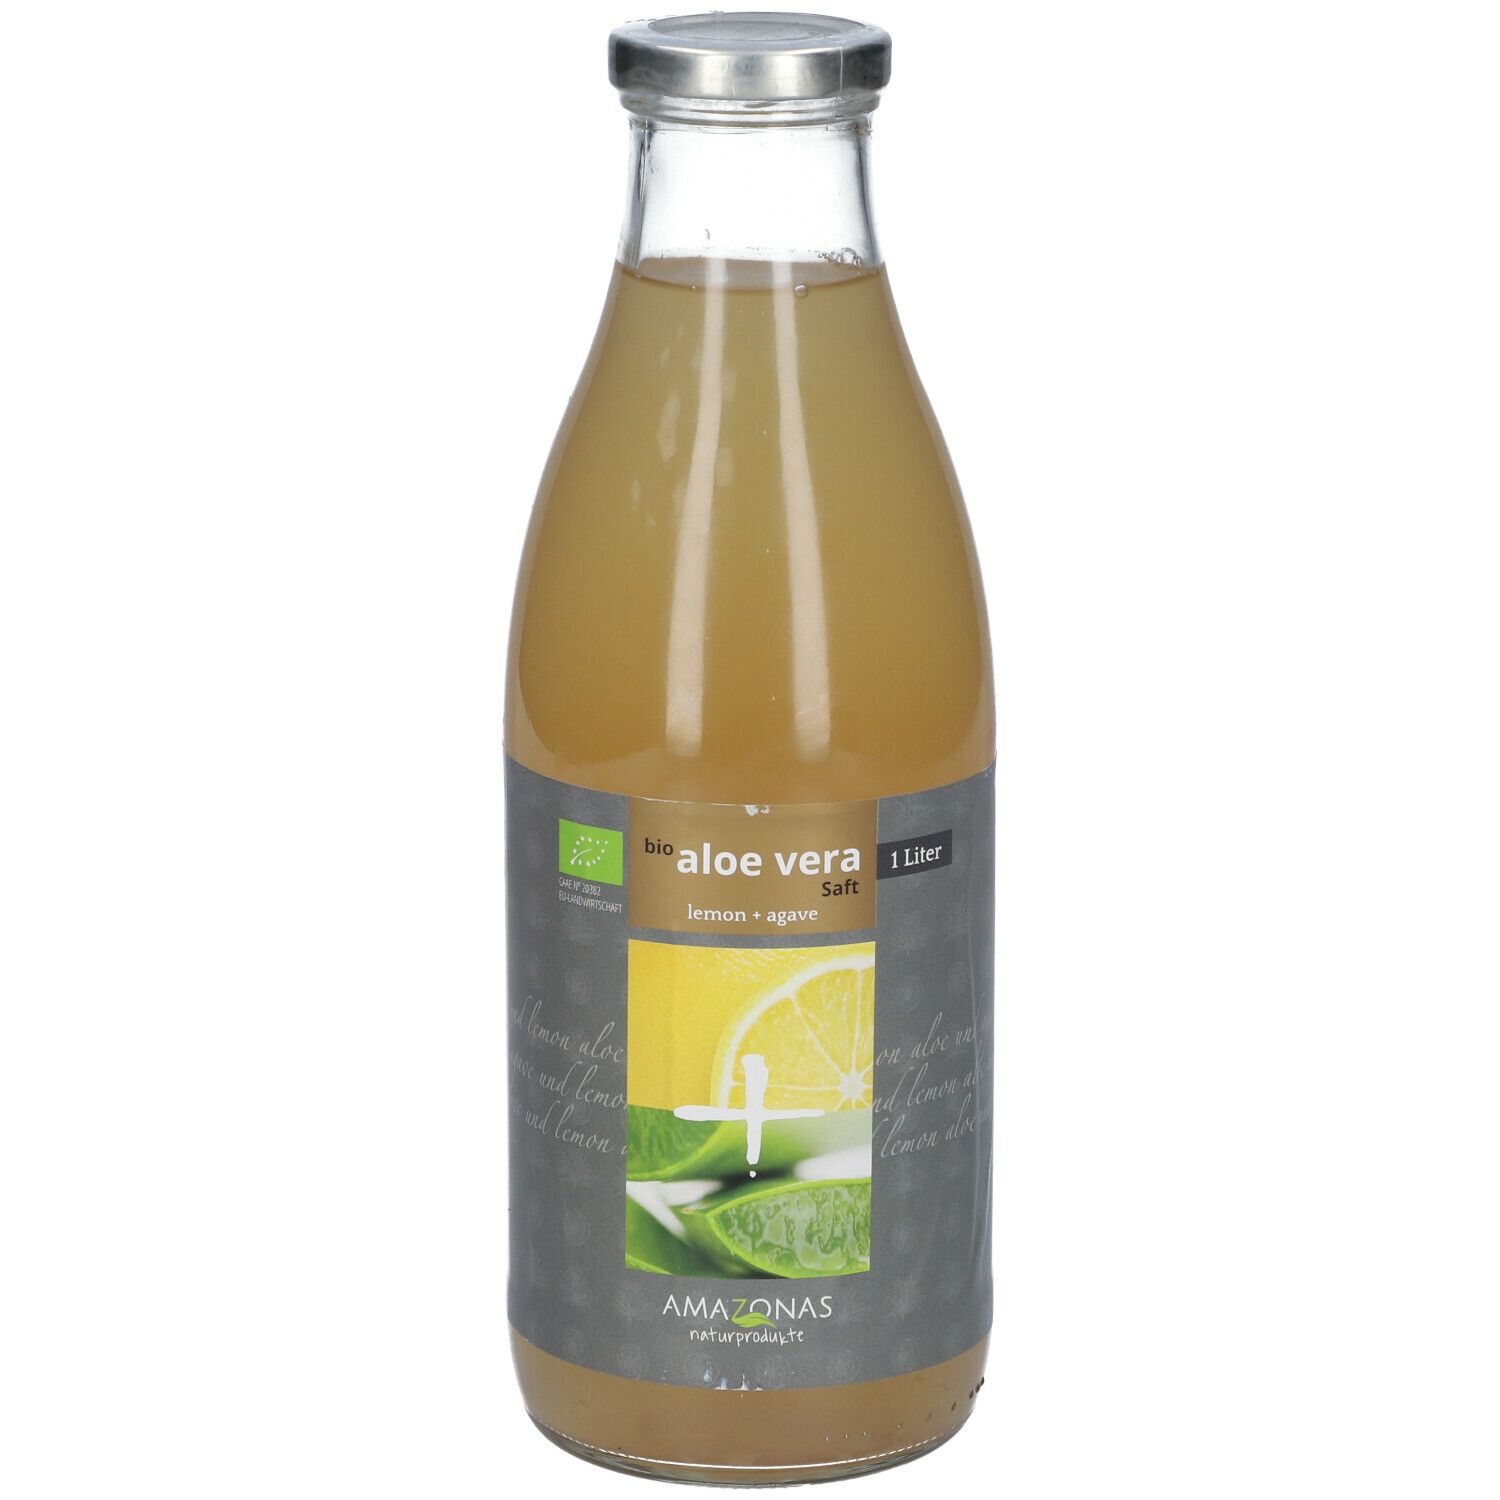 BIO Aloe Vera Saft Lemon + Agave